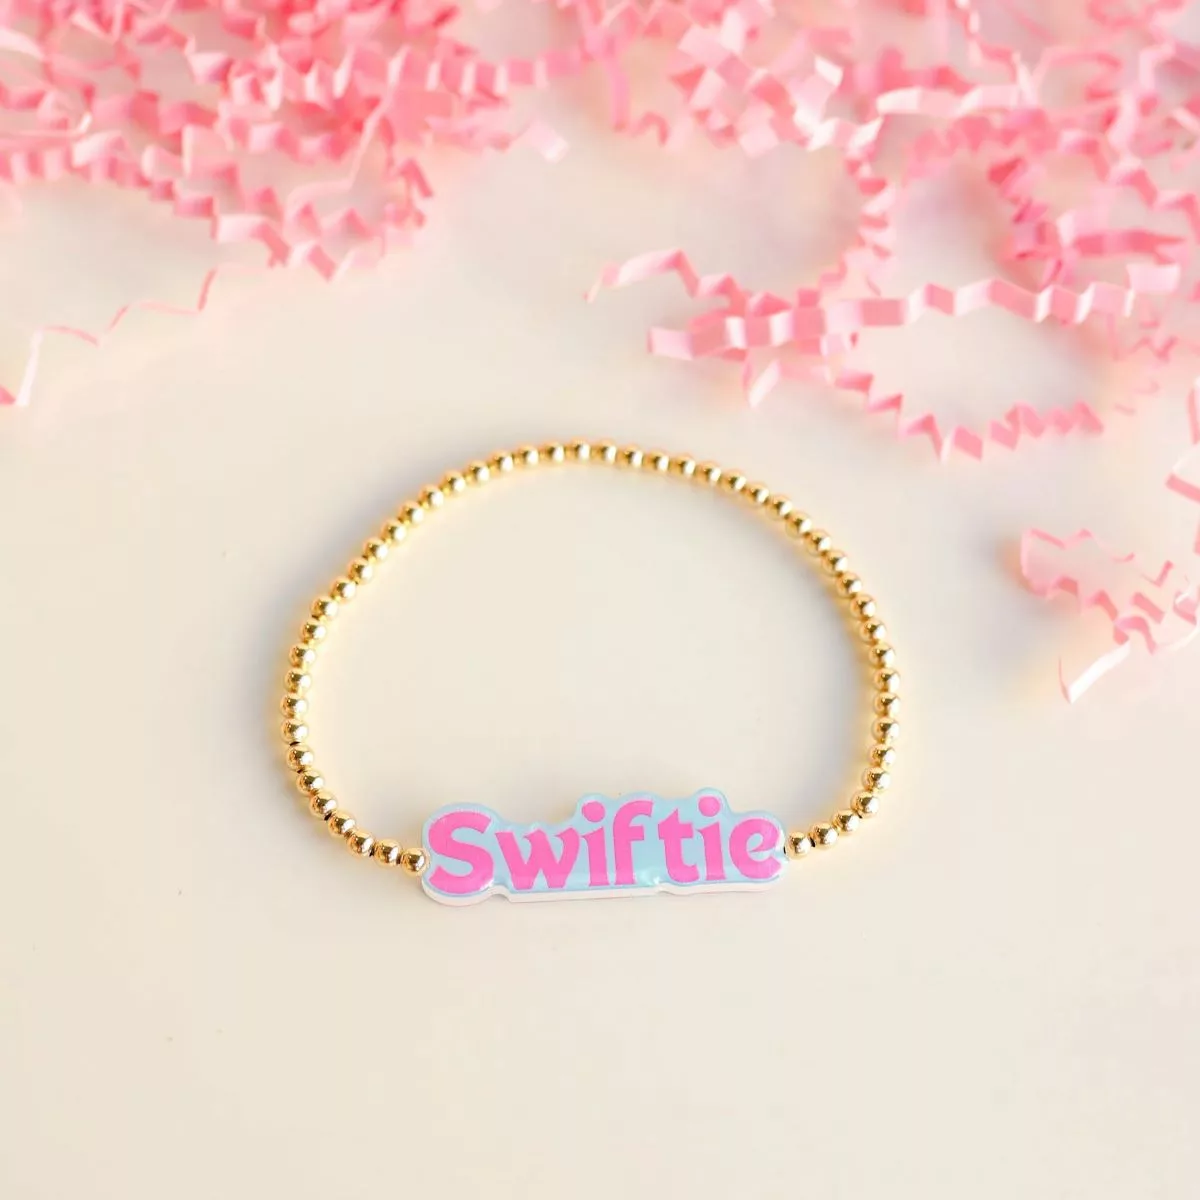 Stylish Gift Idea for Swifties